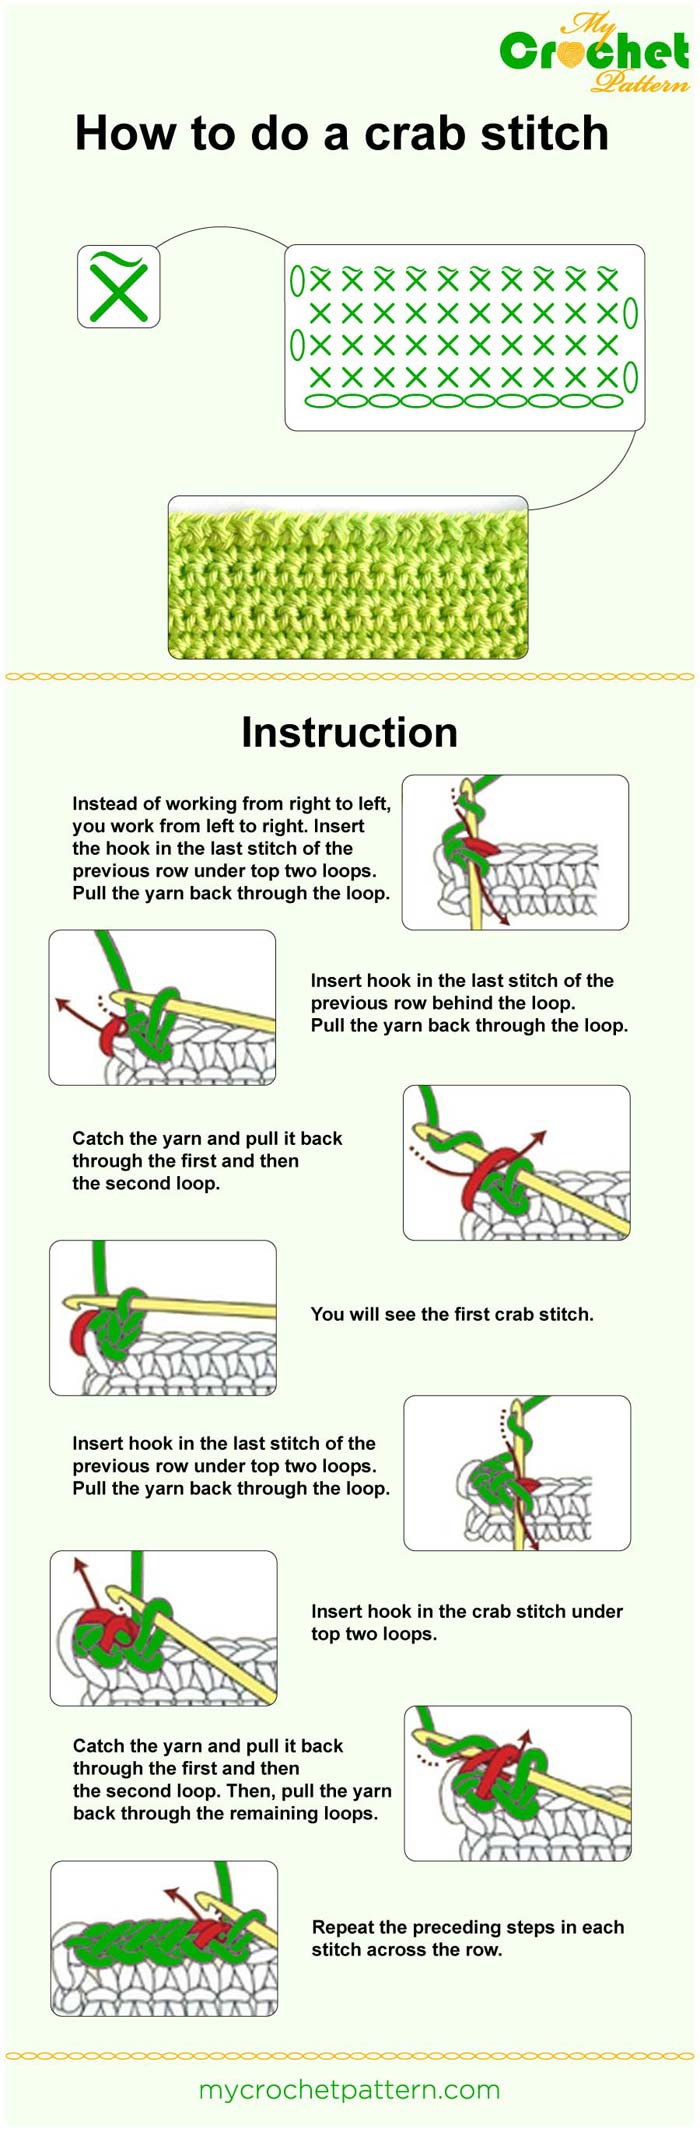 how-to-do-a-crab-stitch-2.jpg